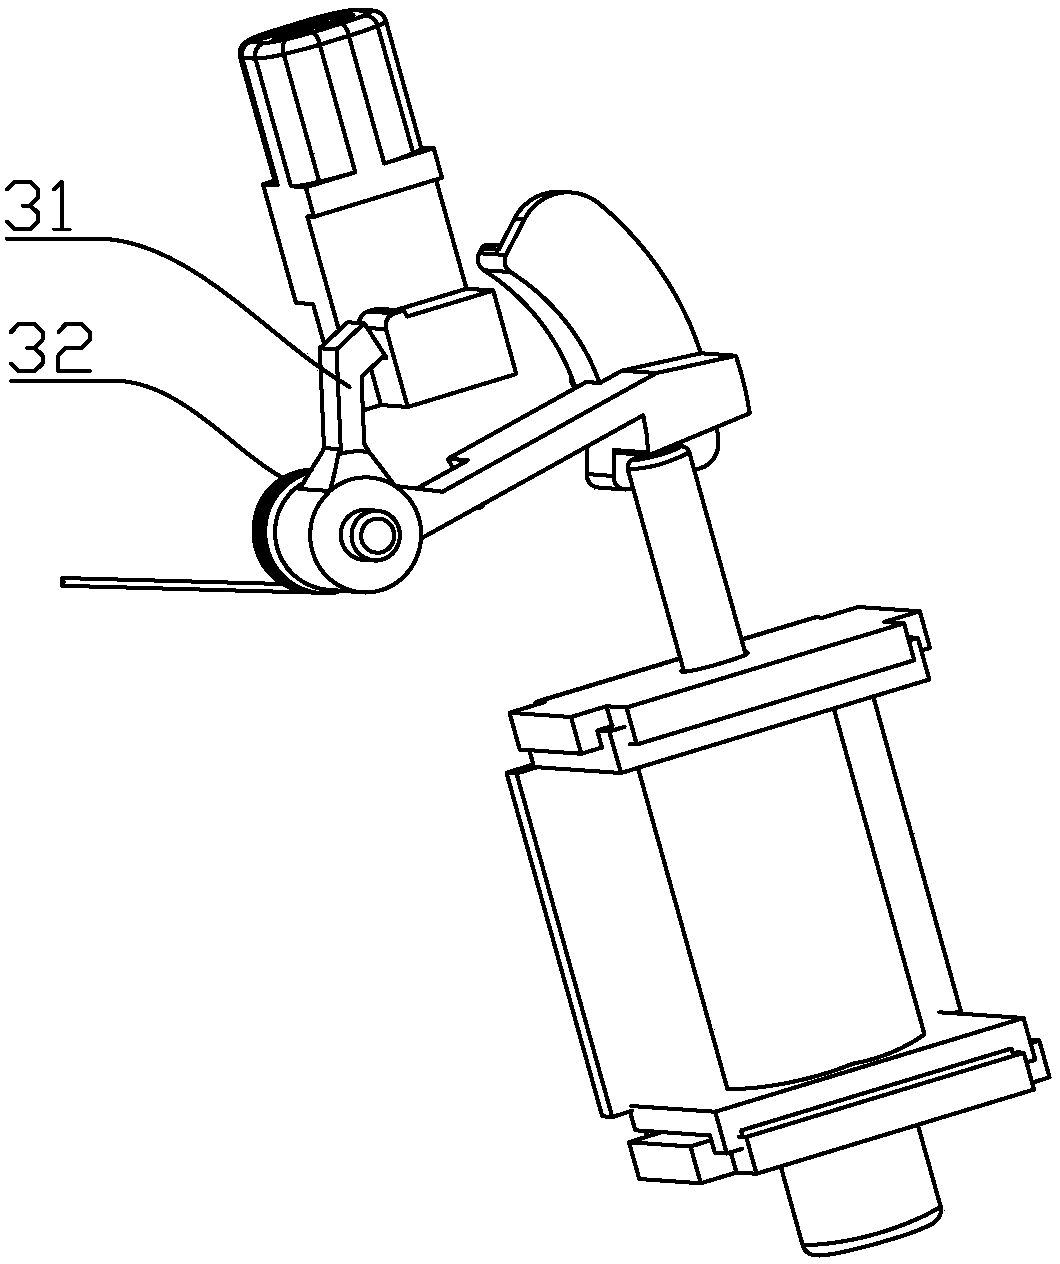 Tripping mechanism of electric leakage breaker